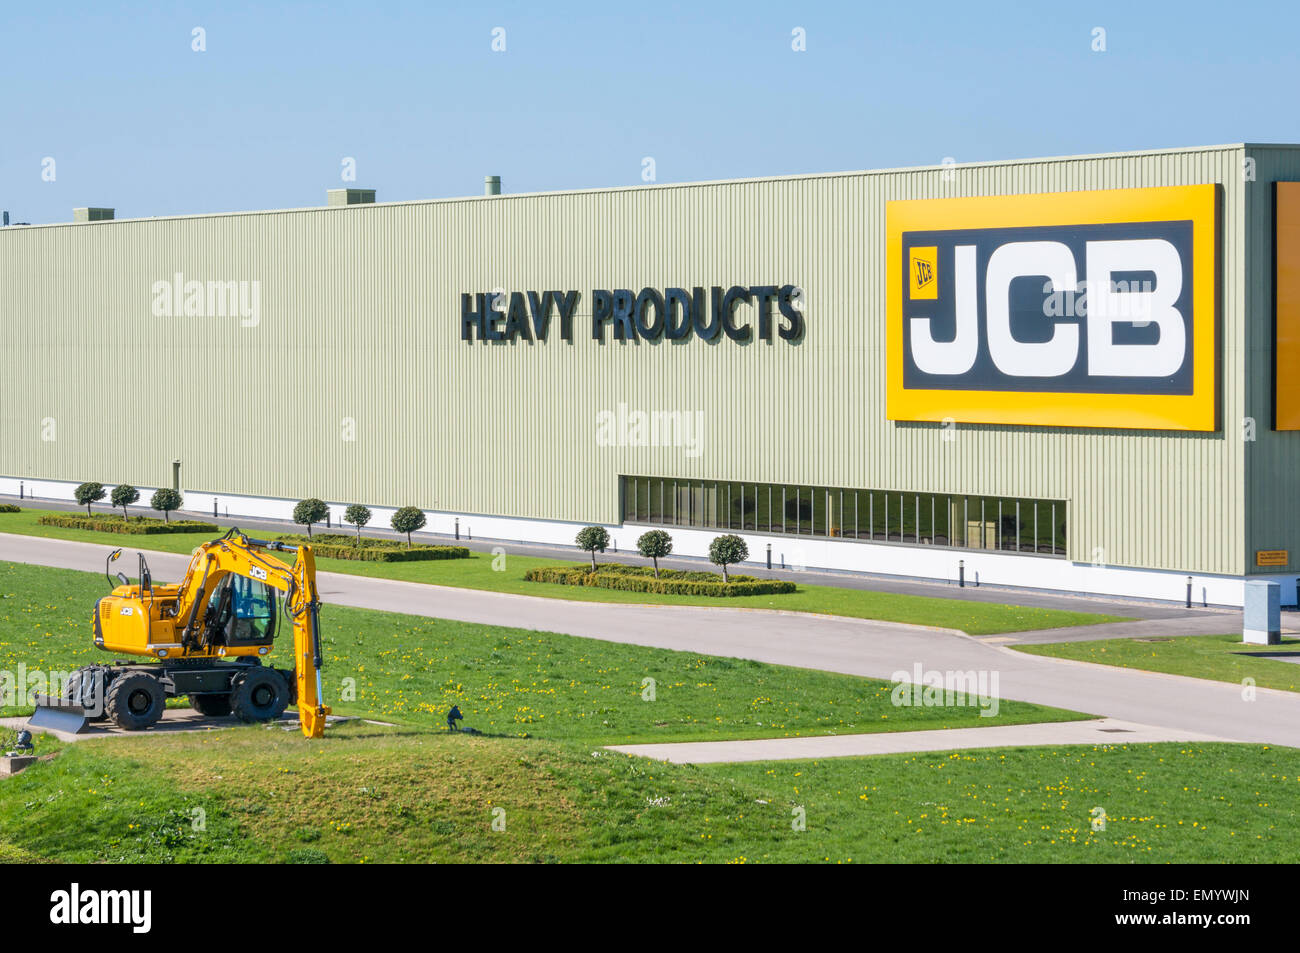 JCB Heavy Products Factory, Beamhurst, Uttoxeter, Staffordshire, England, UK, GB EU, Europe Stock Photo